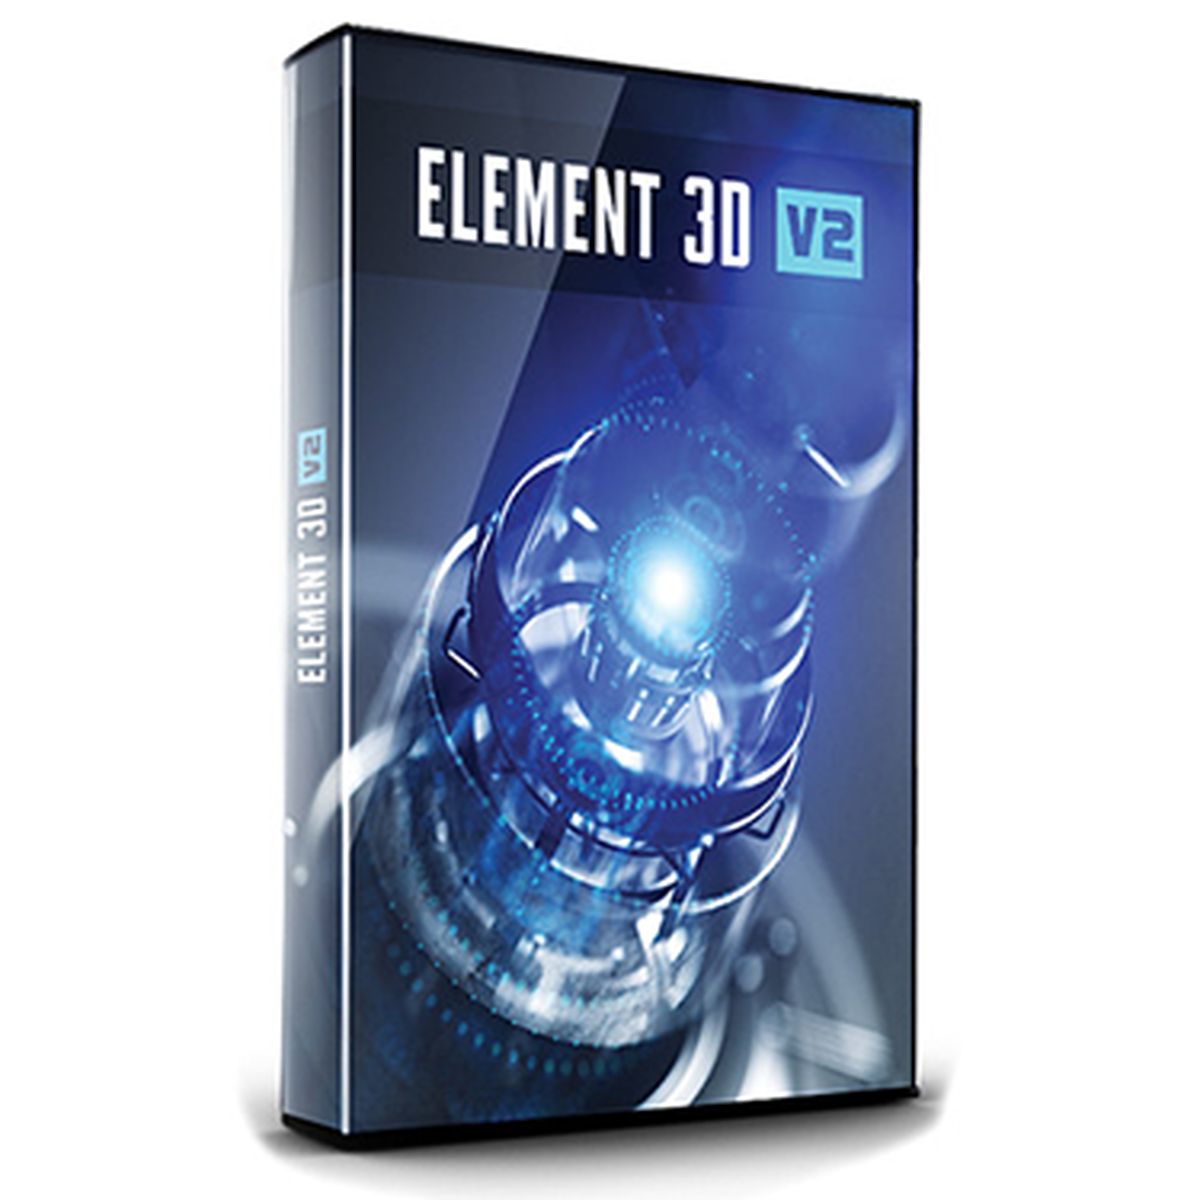 Element 3d V2 デジハリストア